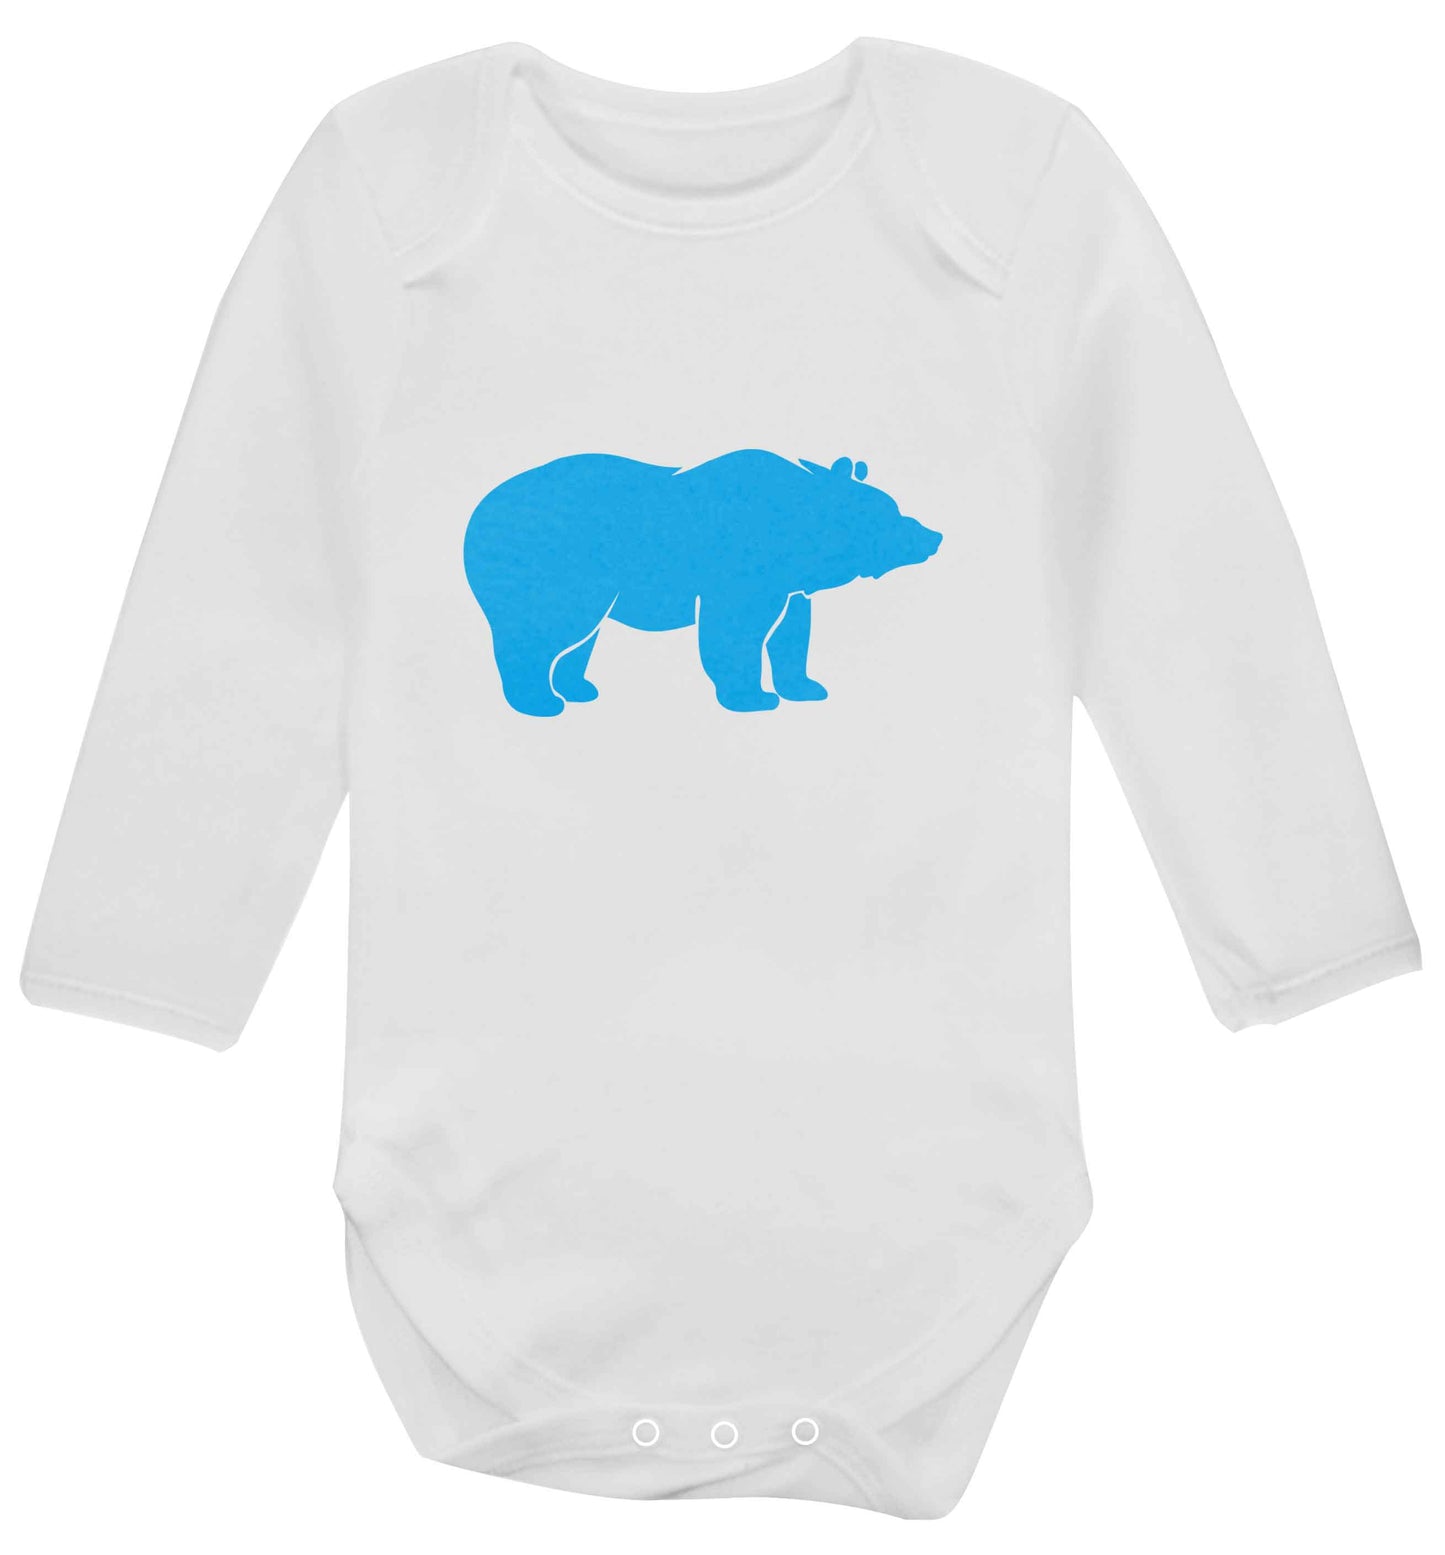 Blue bear baby vest long sleeved white 6-12 months